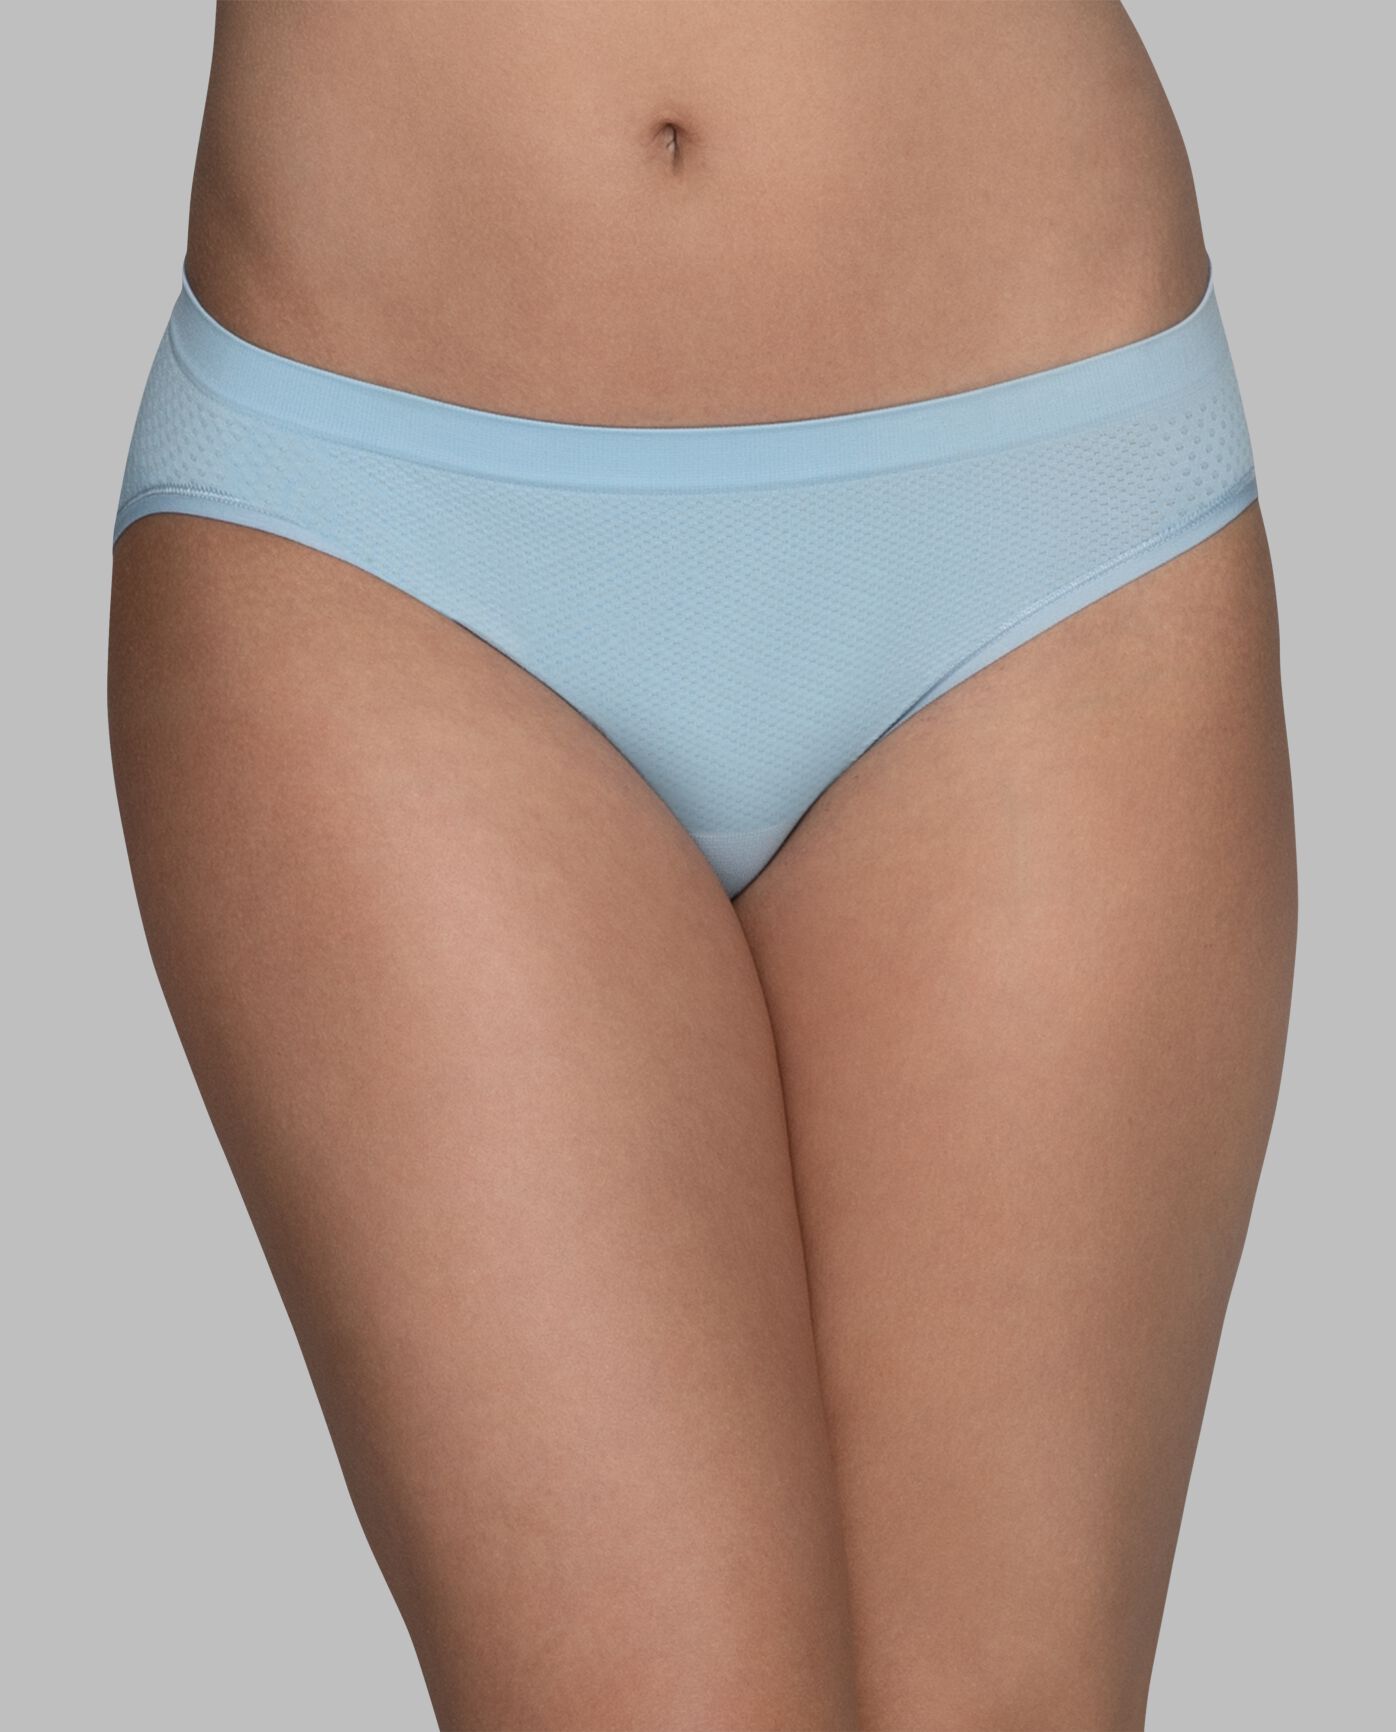 Women's Breathable Seamless Bikini Panty, Assorted 3 Pack